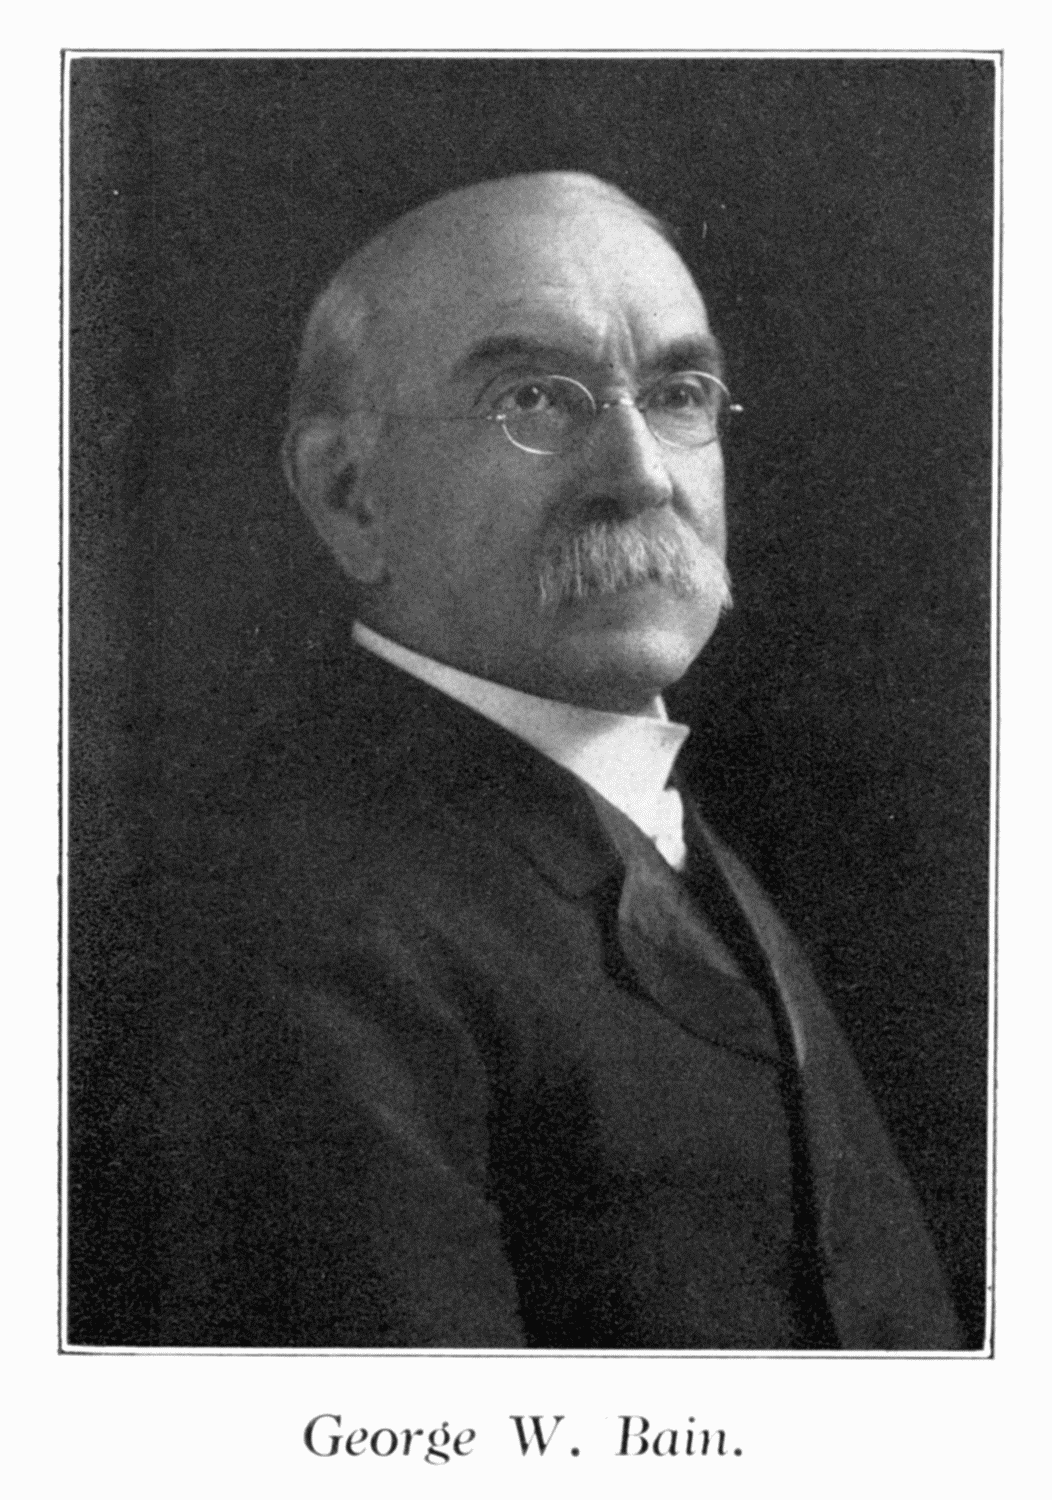 George W. Bain